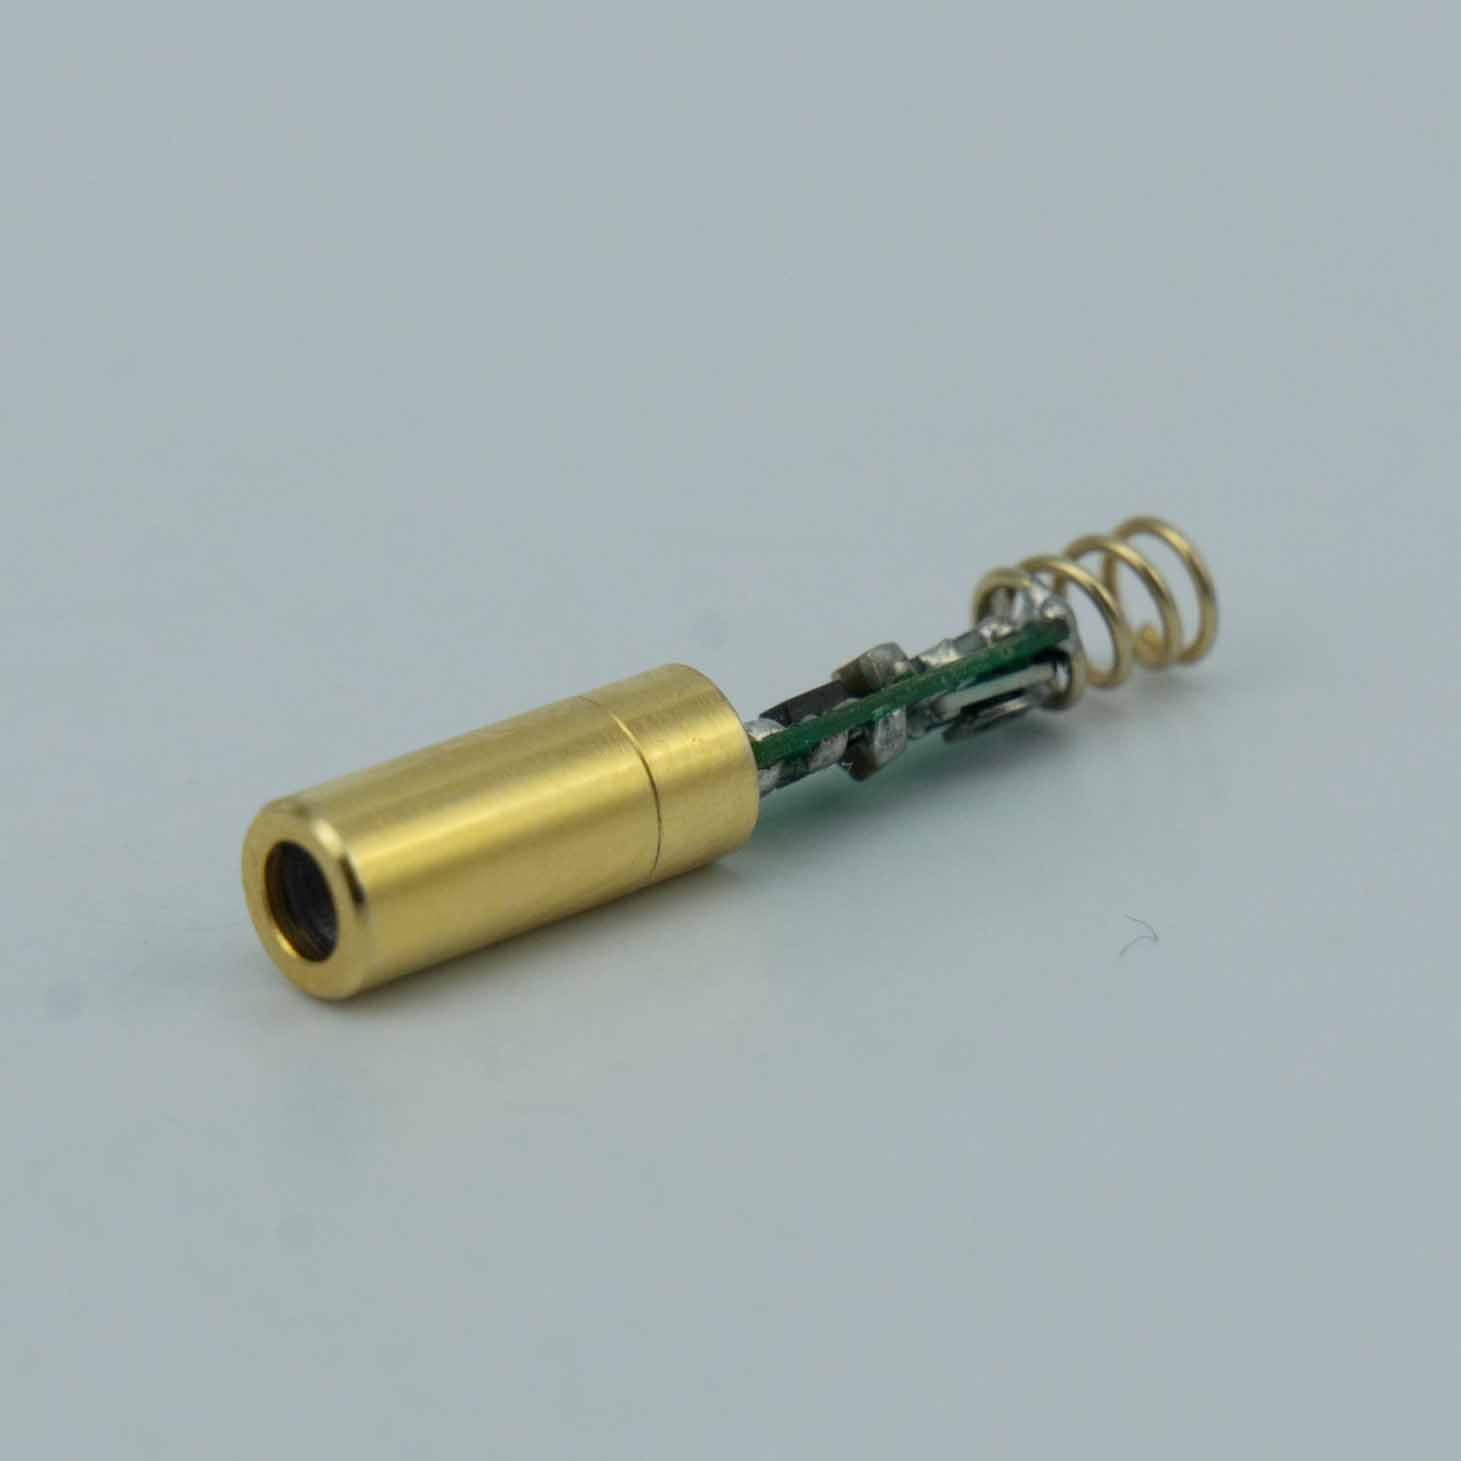 Miniature Laser Φ4mm 520nm 5mw Green Dot Laser Module for Laser Aiming Devices Gun Laser Grips